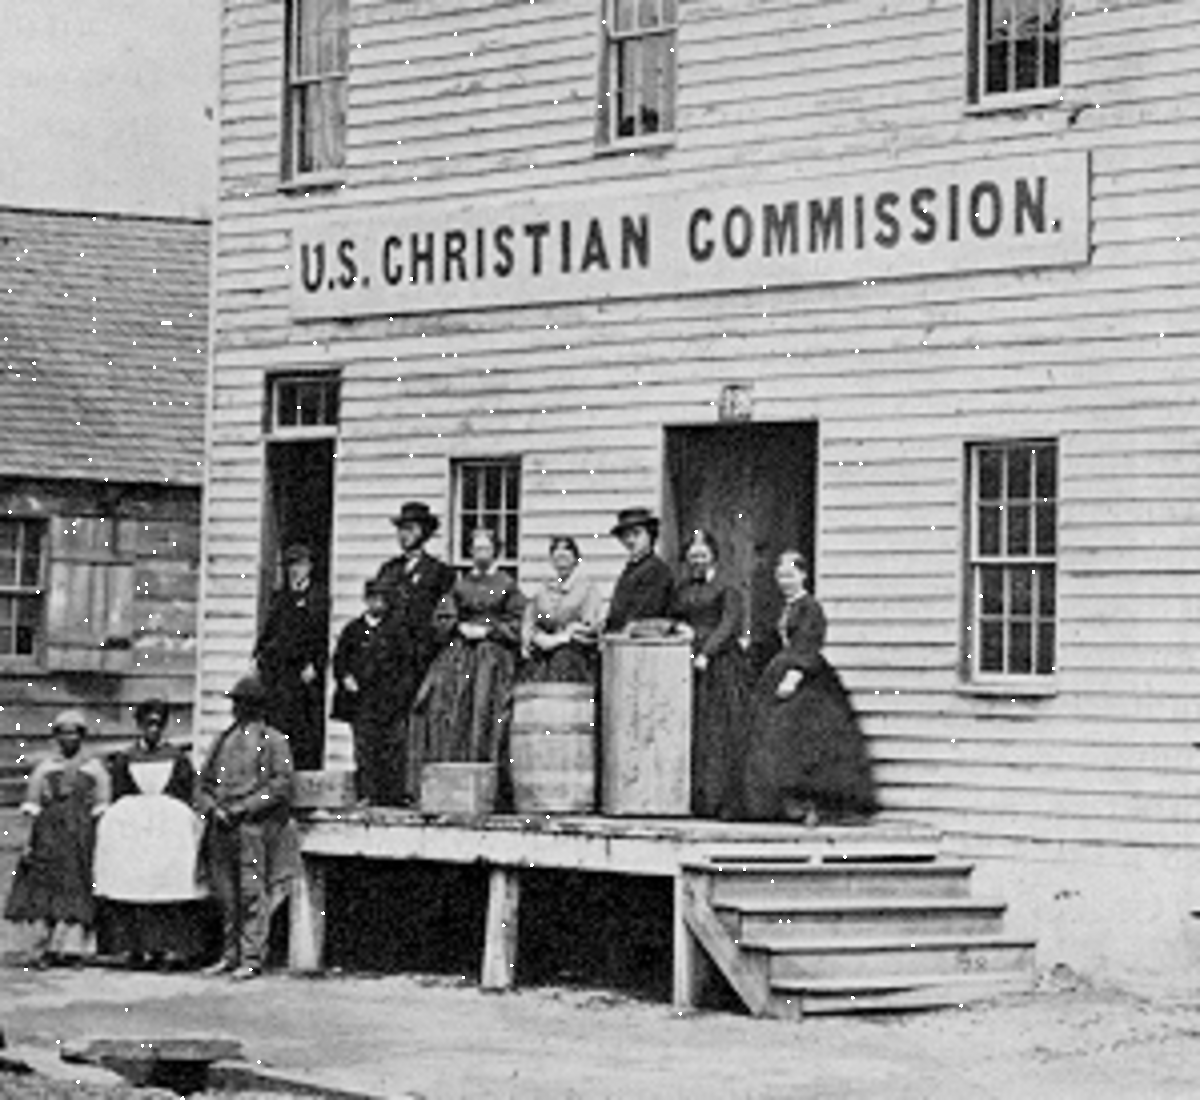 US Christian Commission location